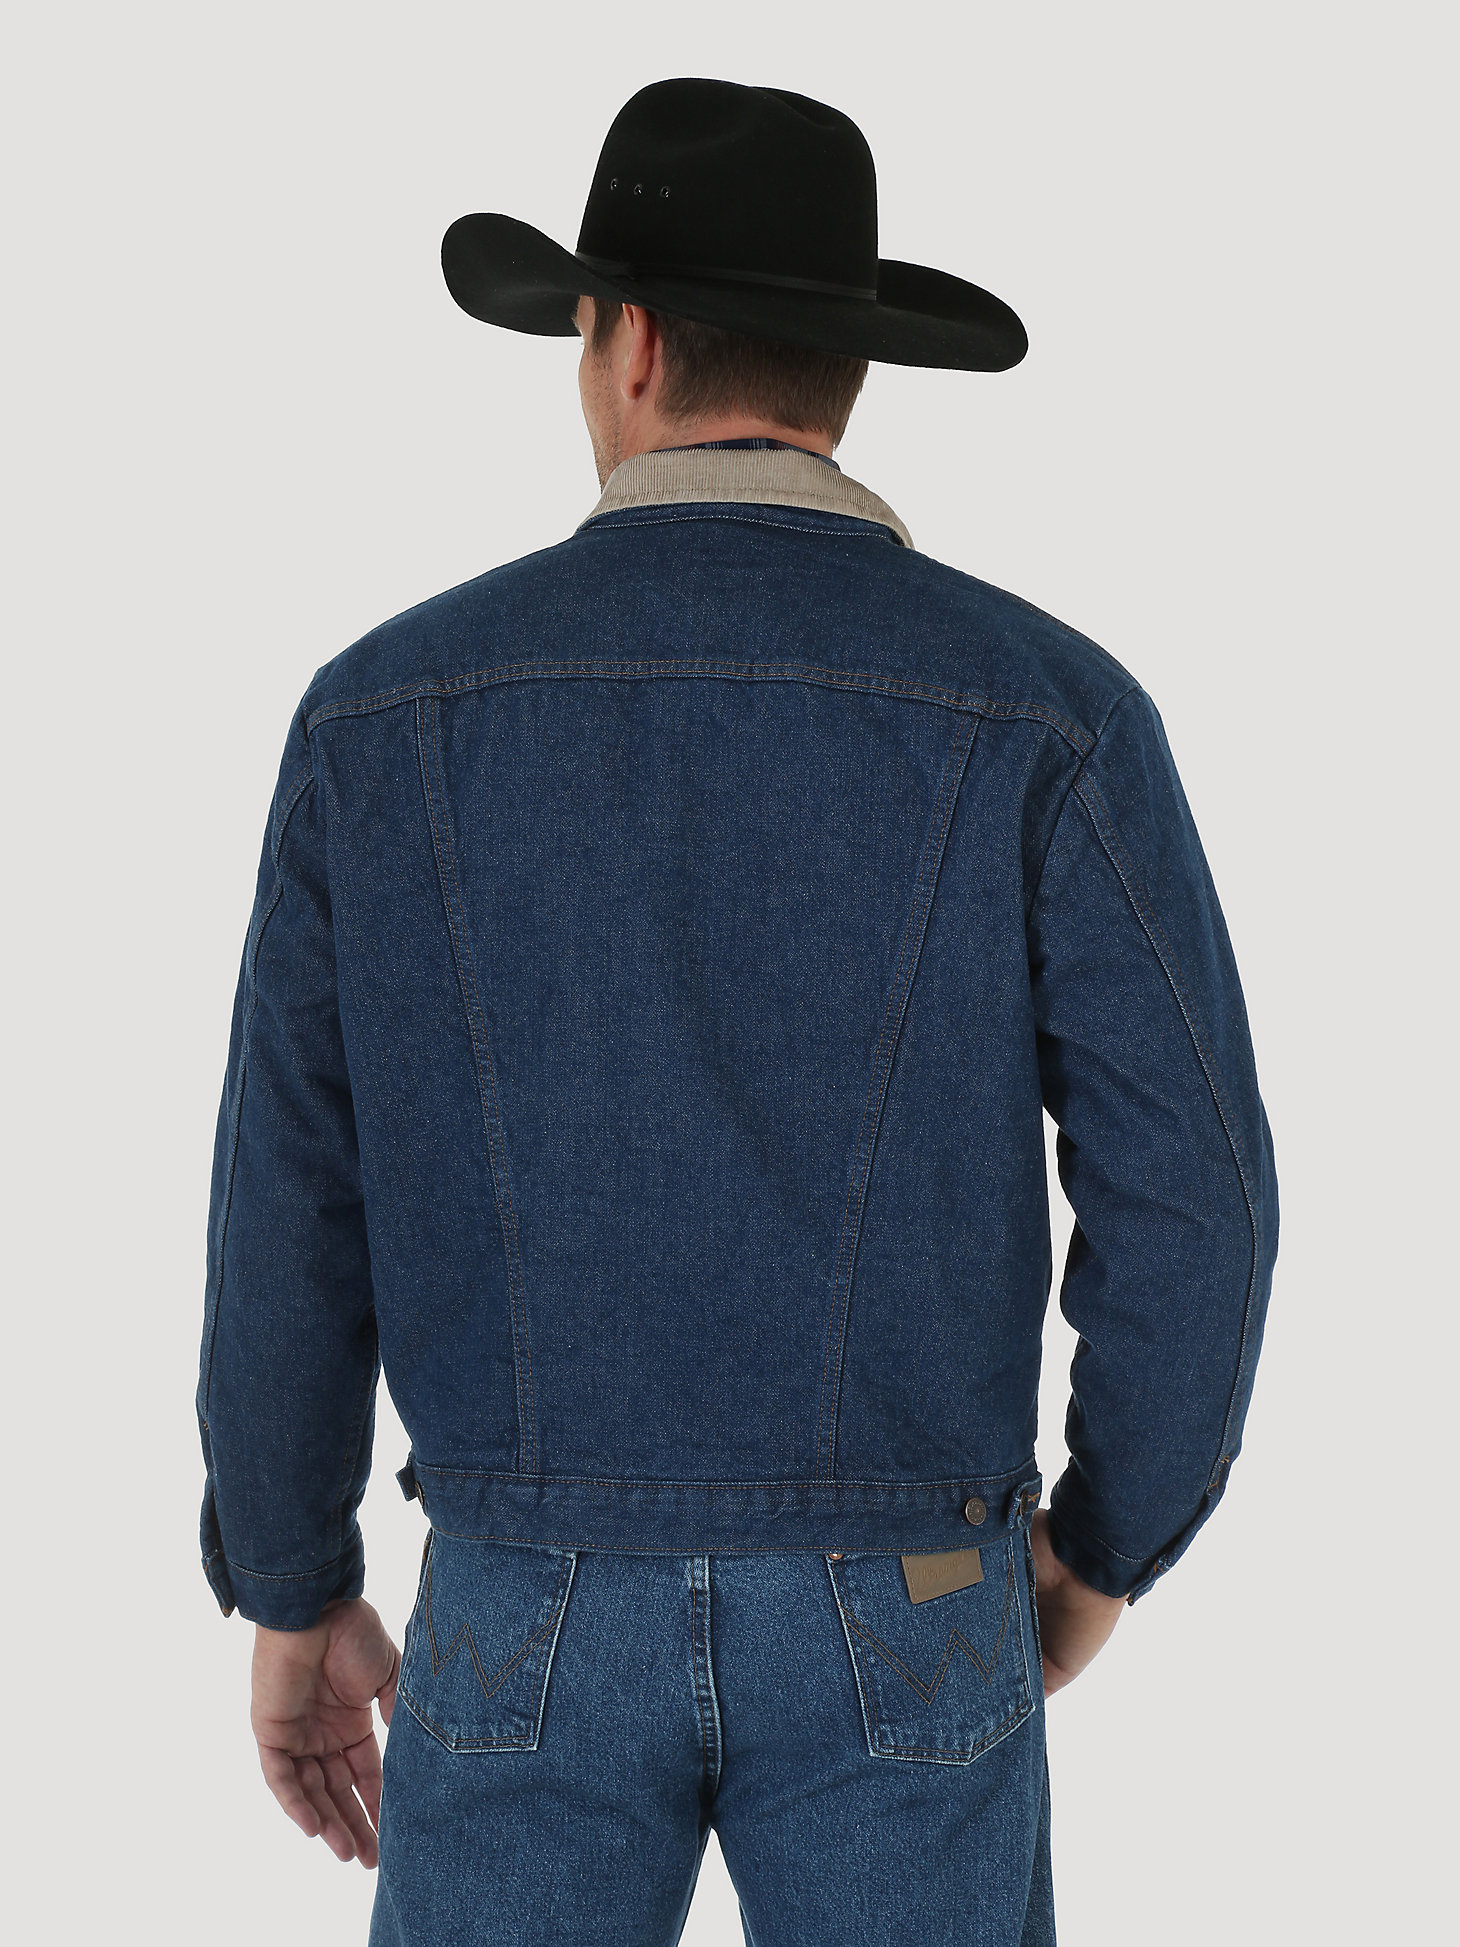 Men's Wrangler® Blanket Lined Corduroy Collar Denim Jacket in Prewashed Indigo alternative view 3